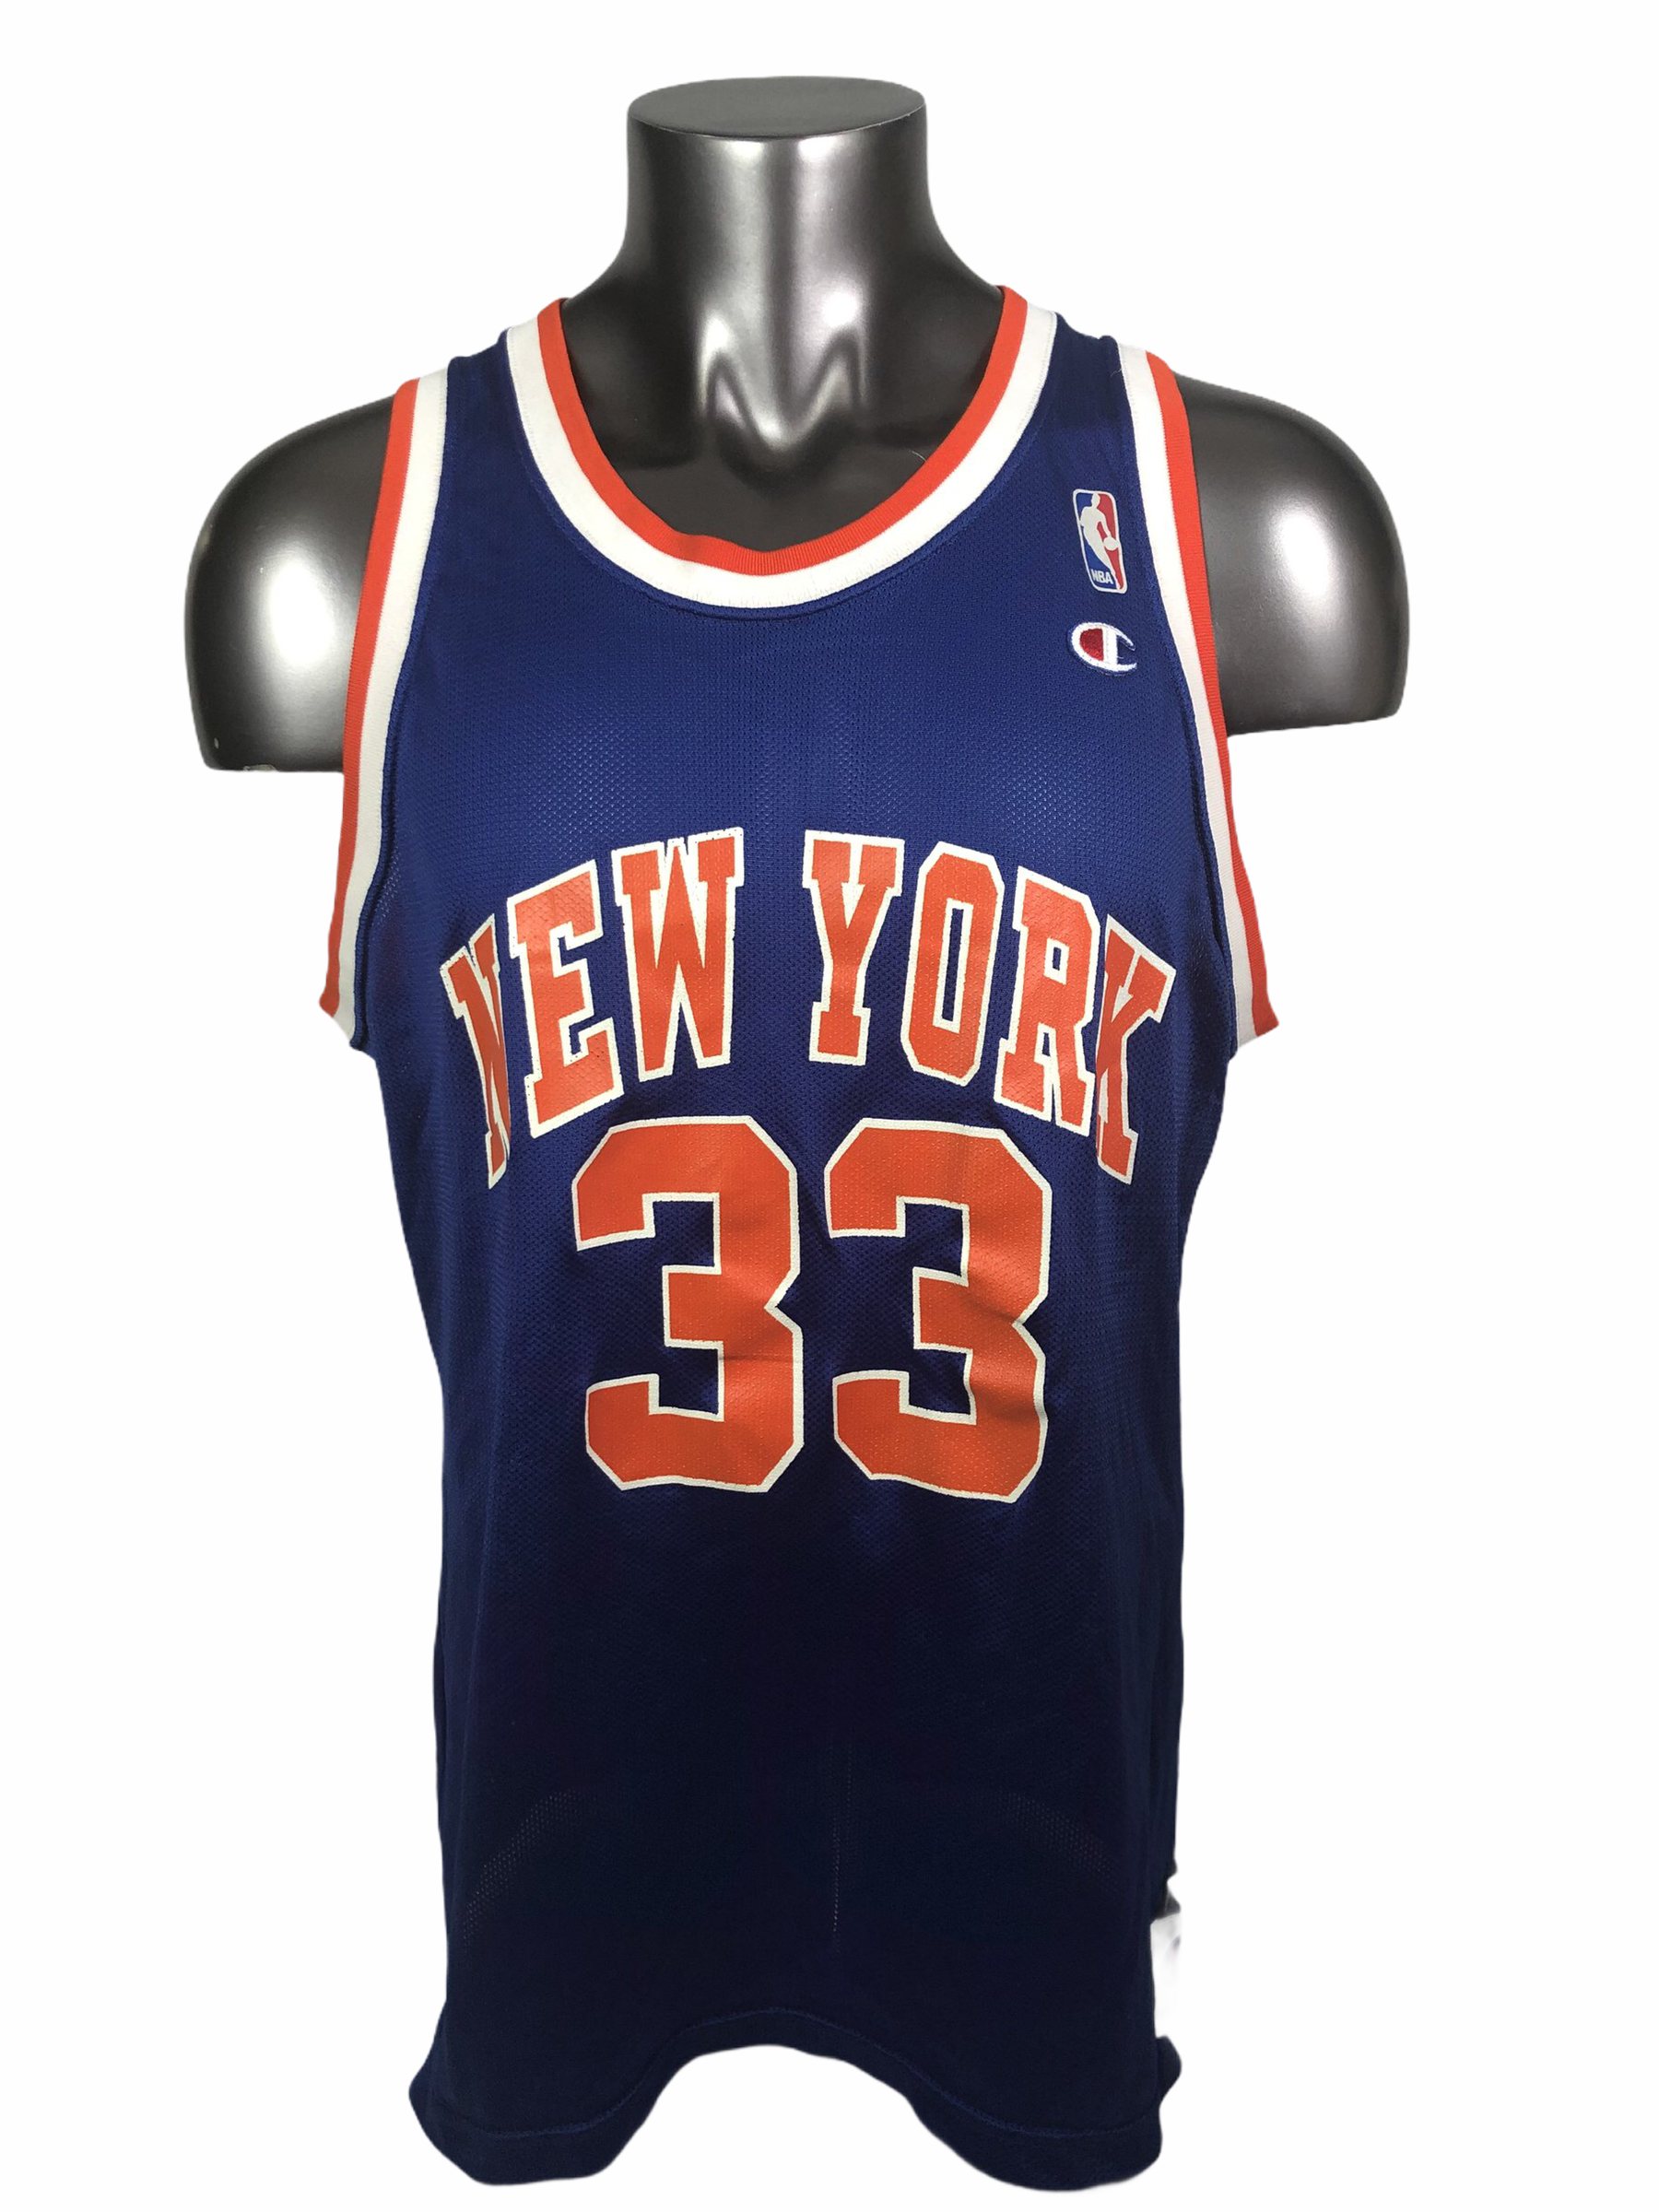 New York Knicks Jerseys - Where to Buy Them